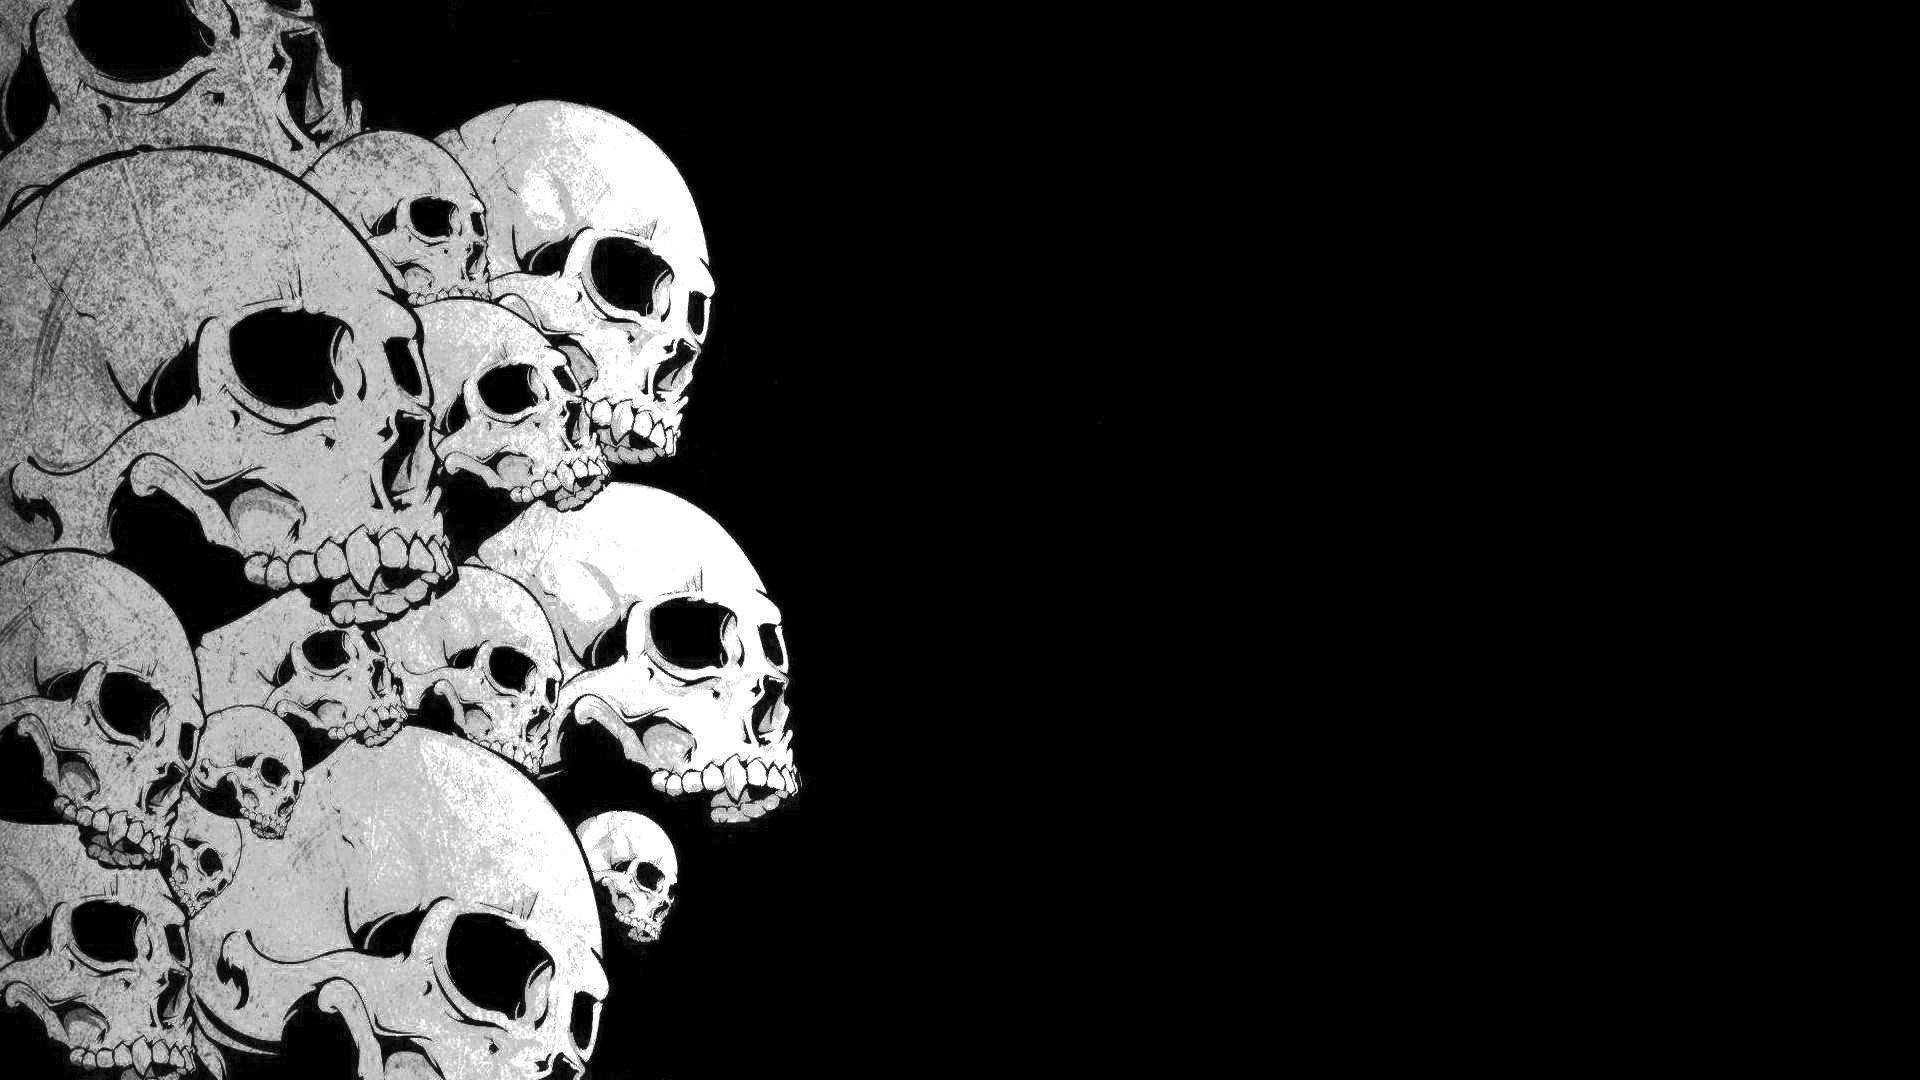 The dark, bold artistry of the Black Skull Wallpaper